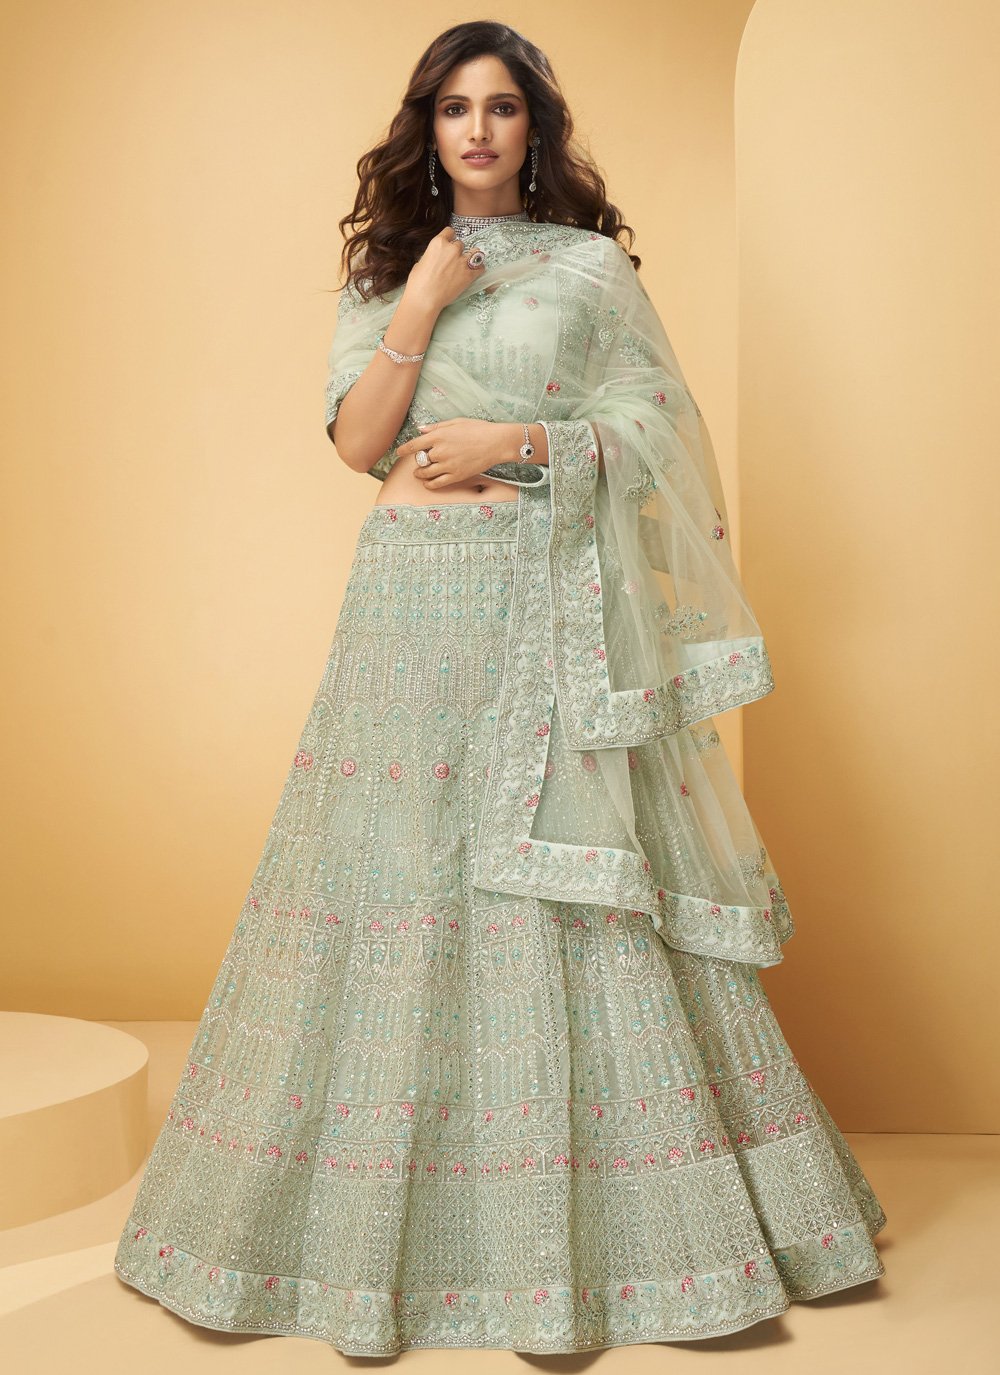 30+ Stunning Engagement Lehenga Designs For Brides | Indian wedding dress,  Indian fashion, Indian bride